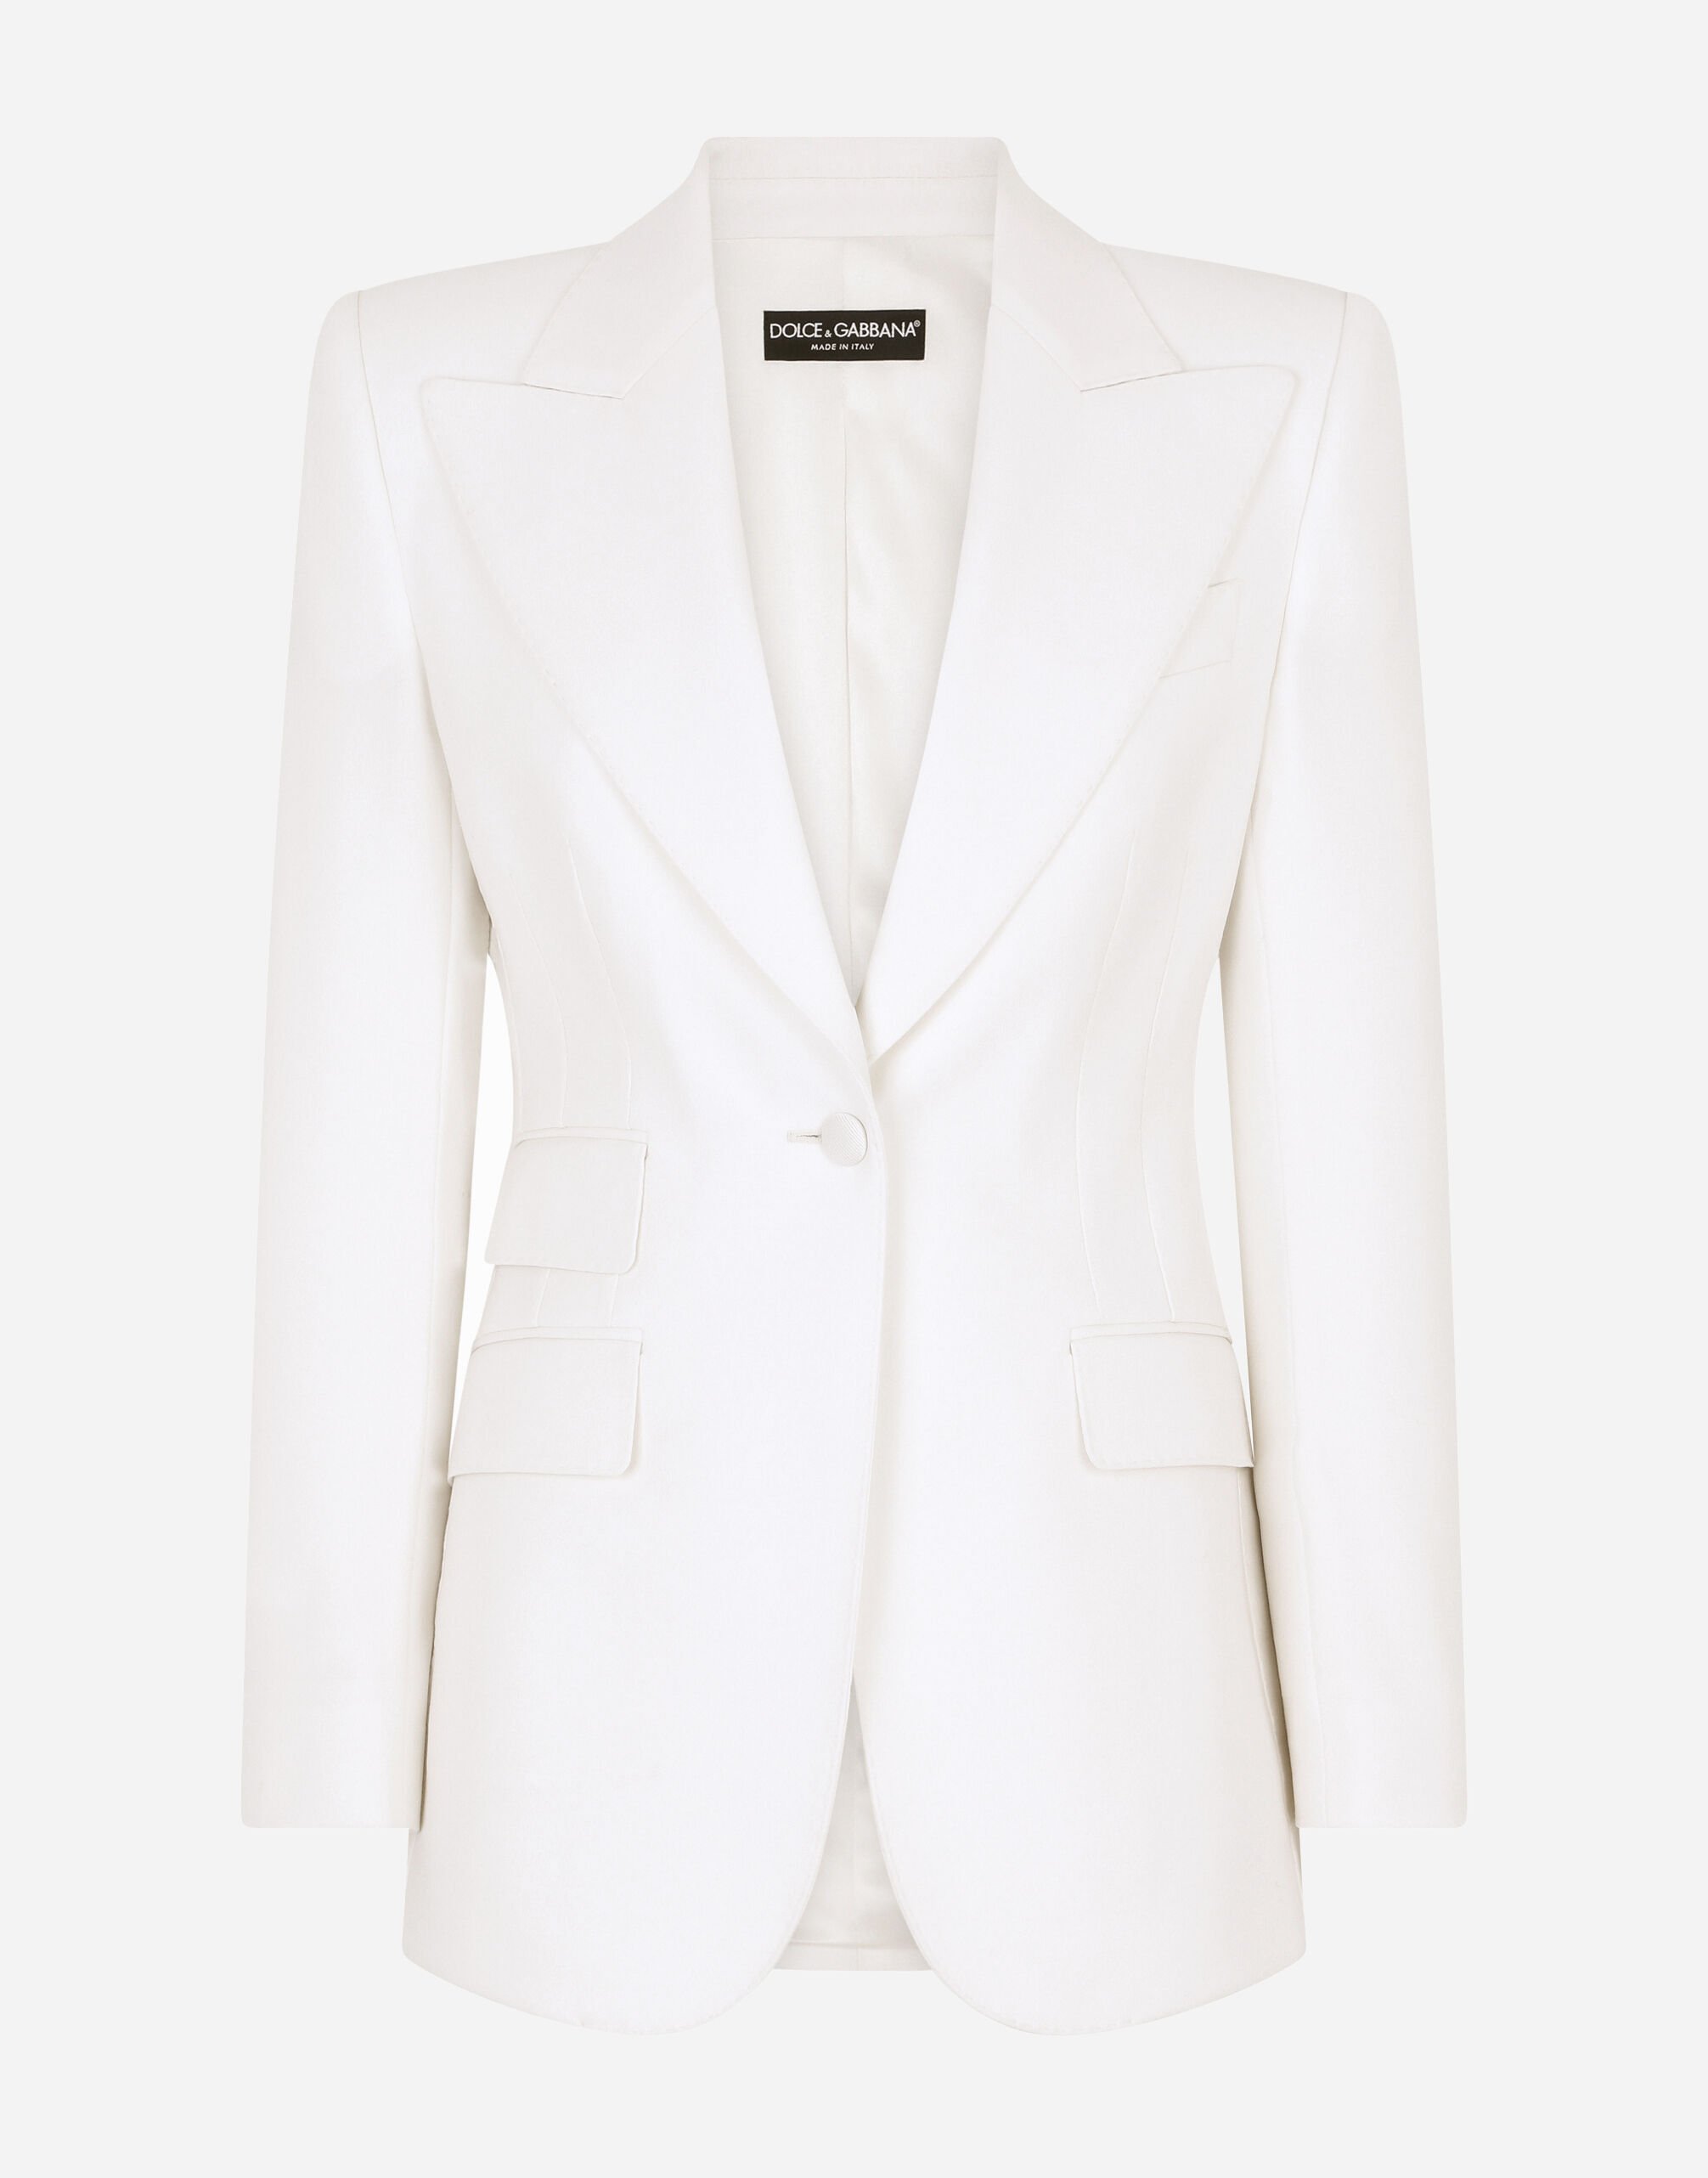 Dolce & Gabbana Jacket in natté fabric Print F29UDTIS1P4